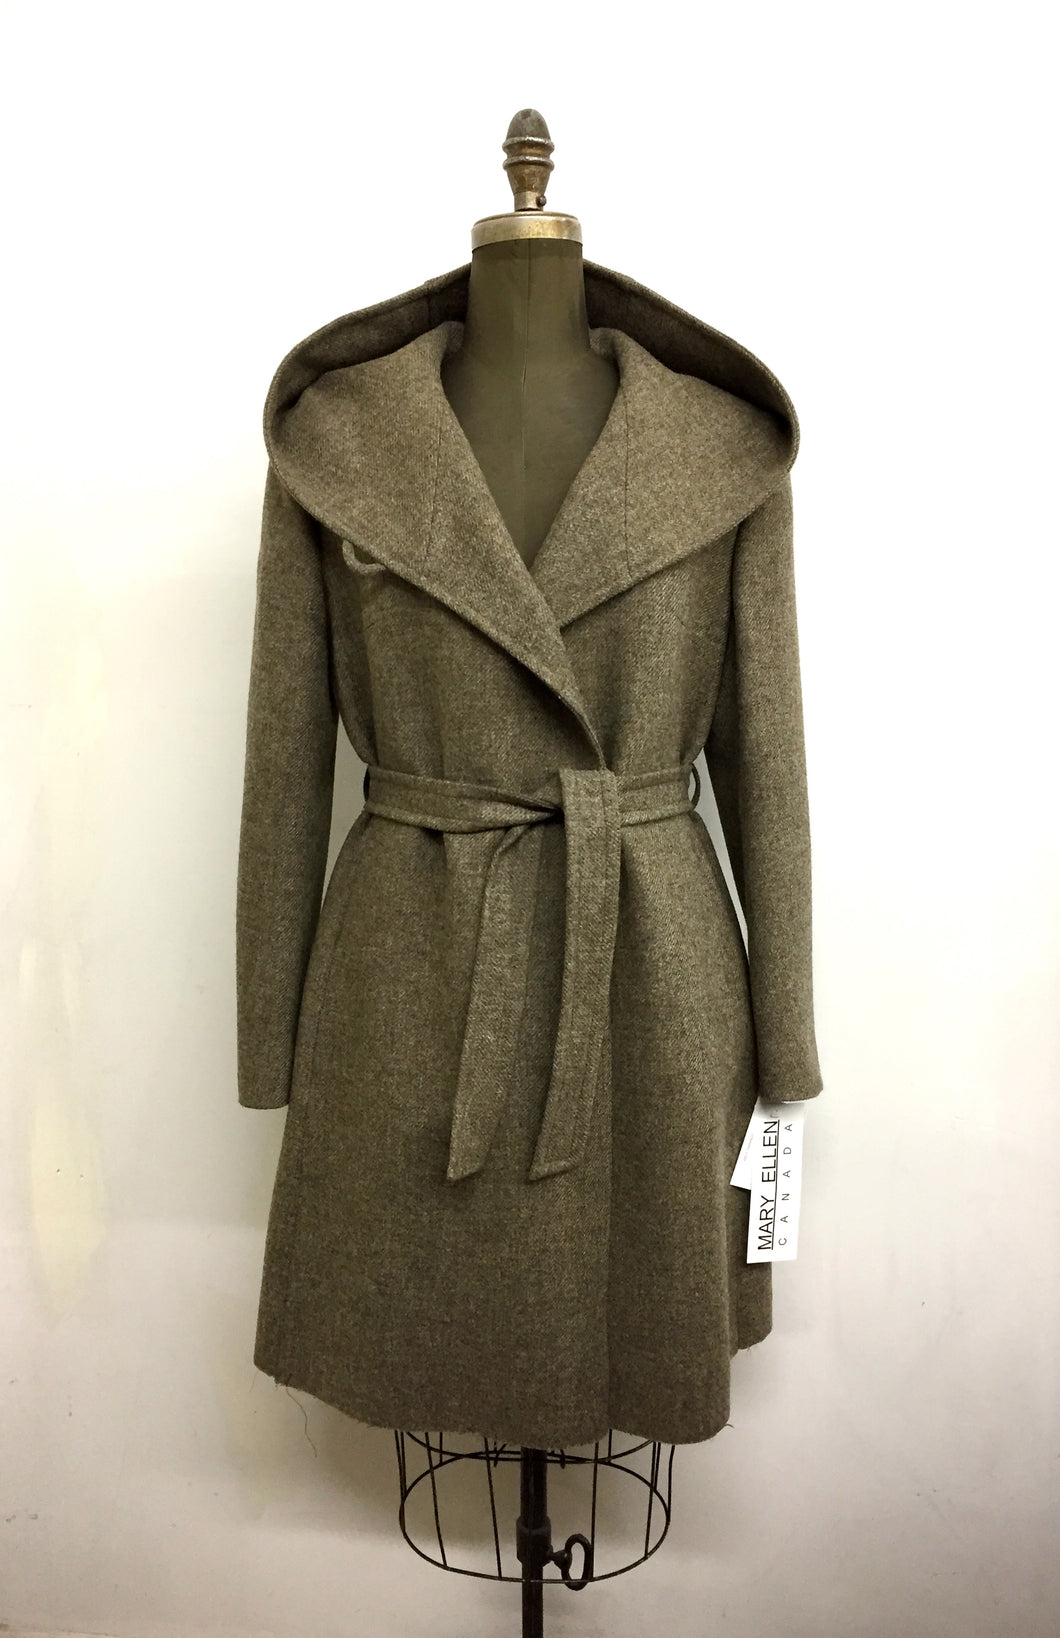 Tiffany Coat - 100% Pure Merino Wool